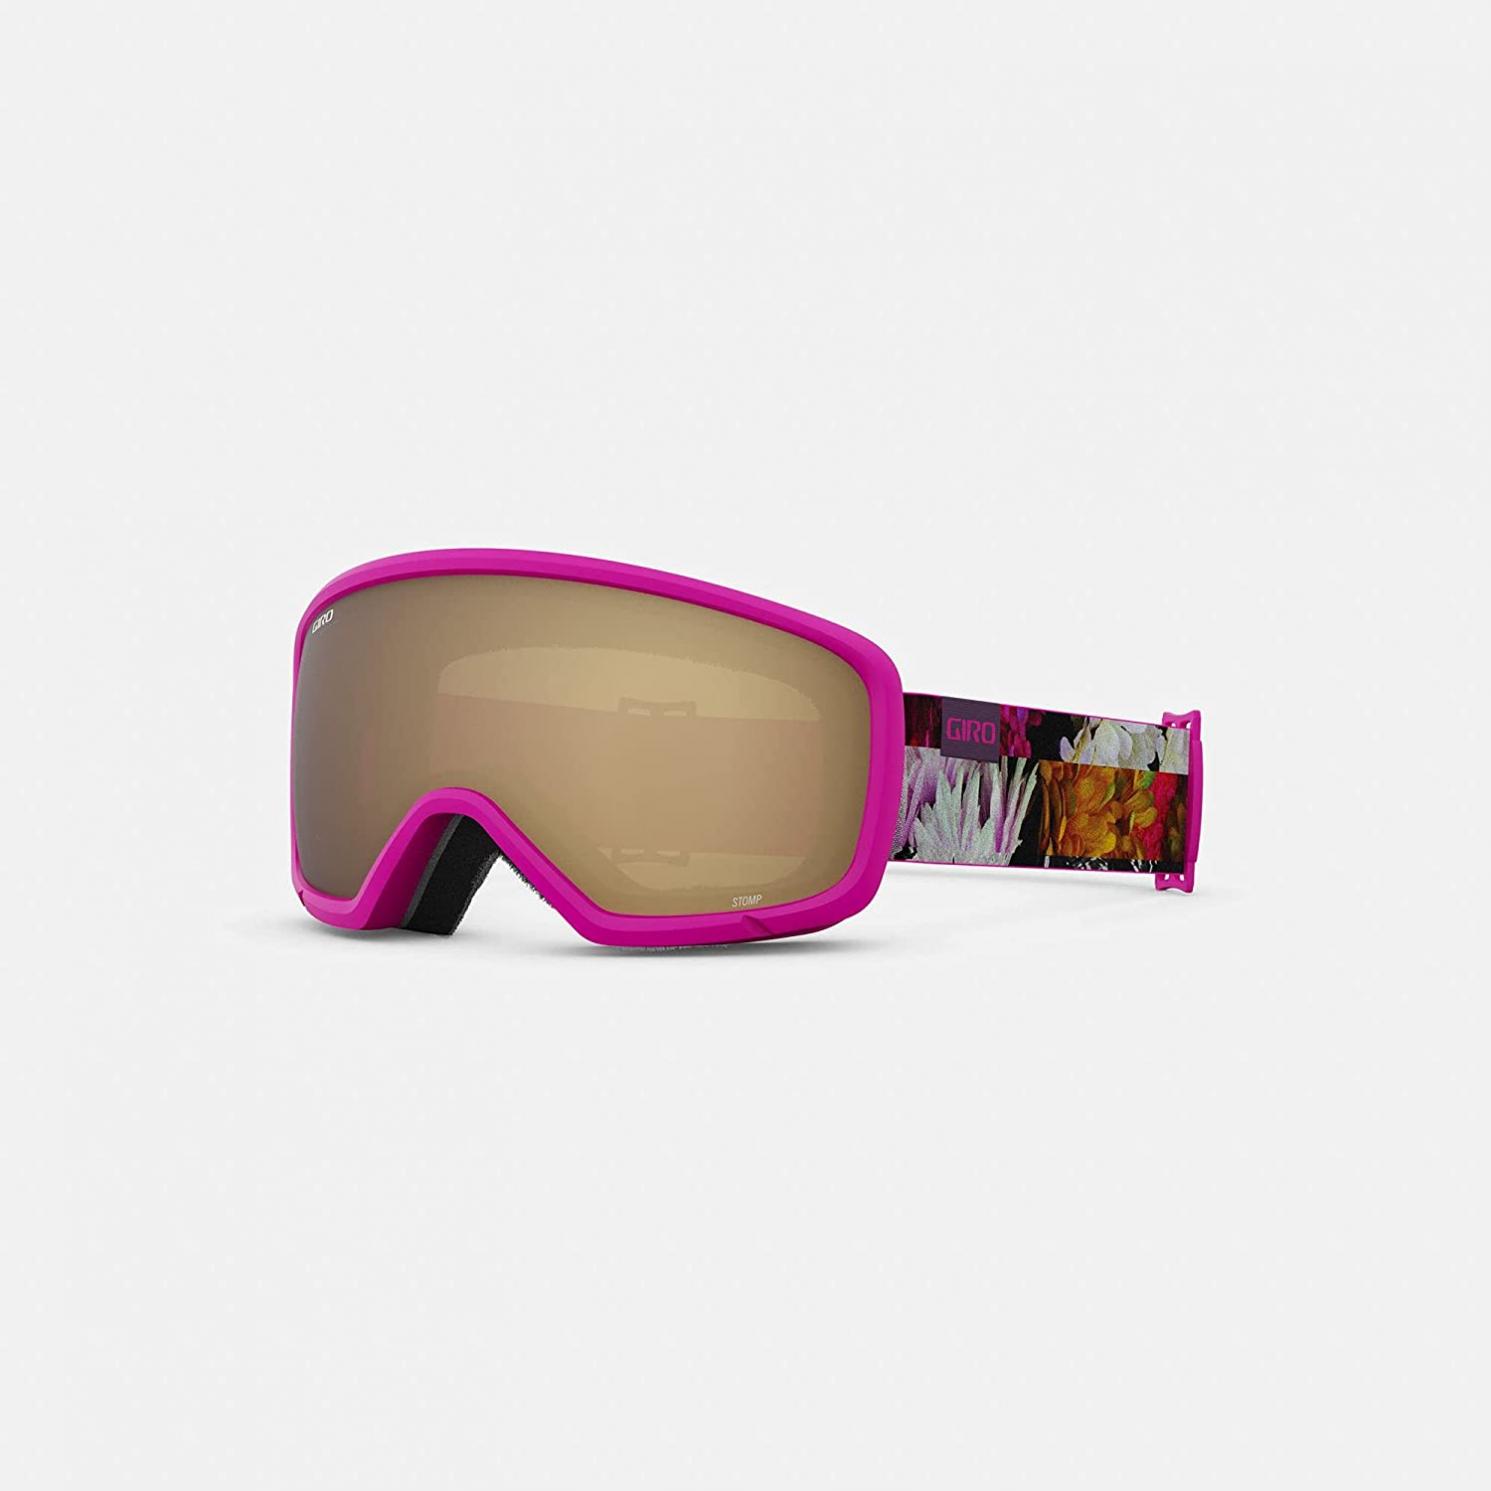 Giro Stomp Kids Ski Goggles - Snowboard Goggles for Youth, Boys & Girls - Anti-Fog - OTG (Over Glasses)